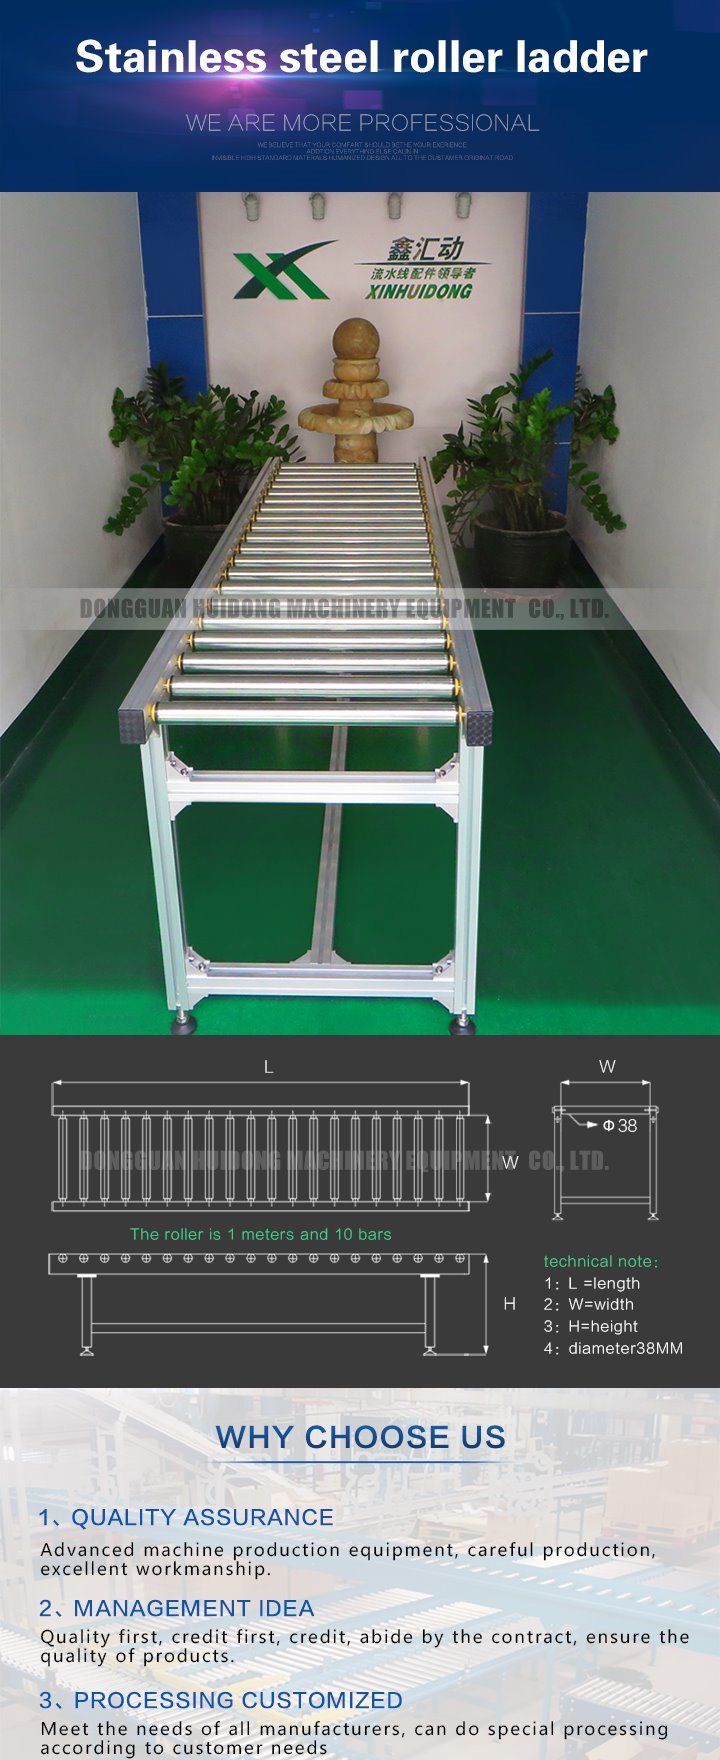 Stainless Steel Roller Ladder